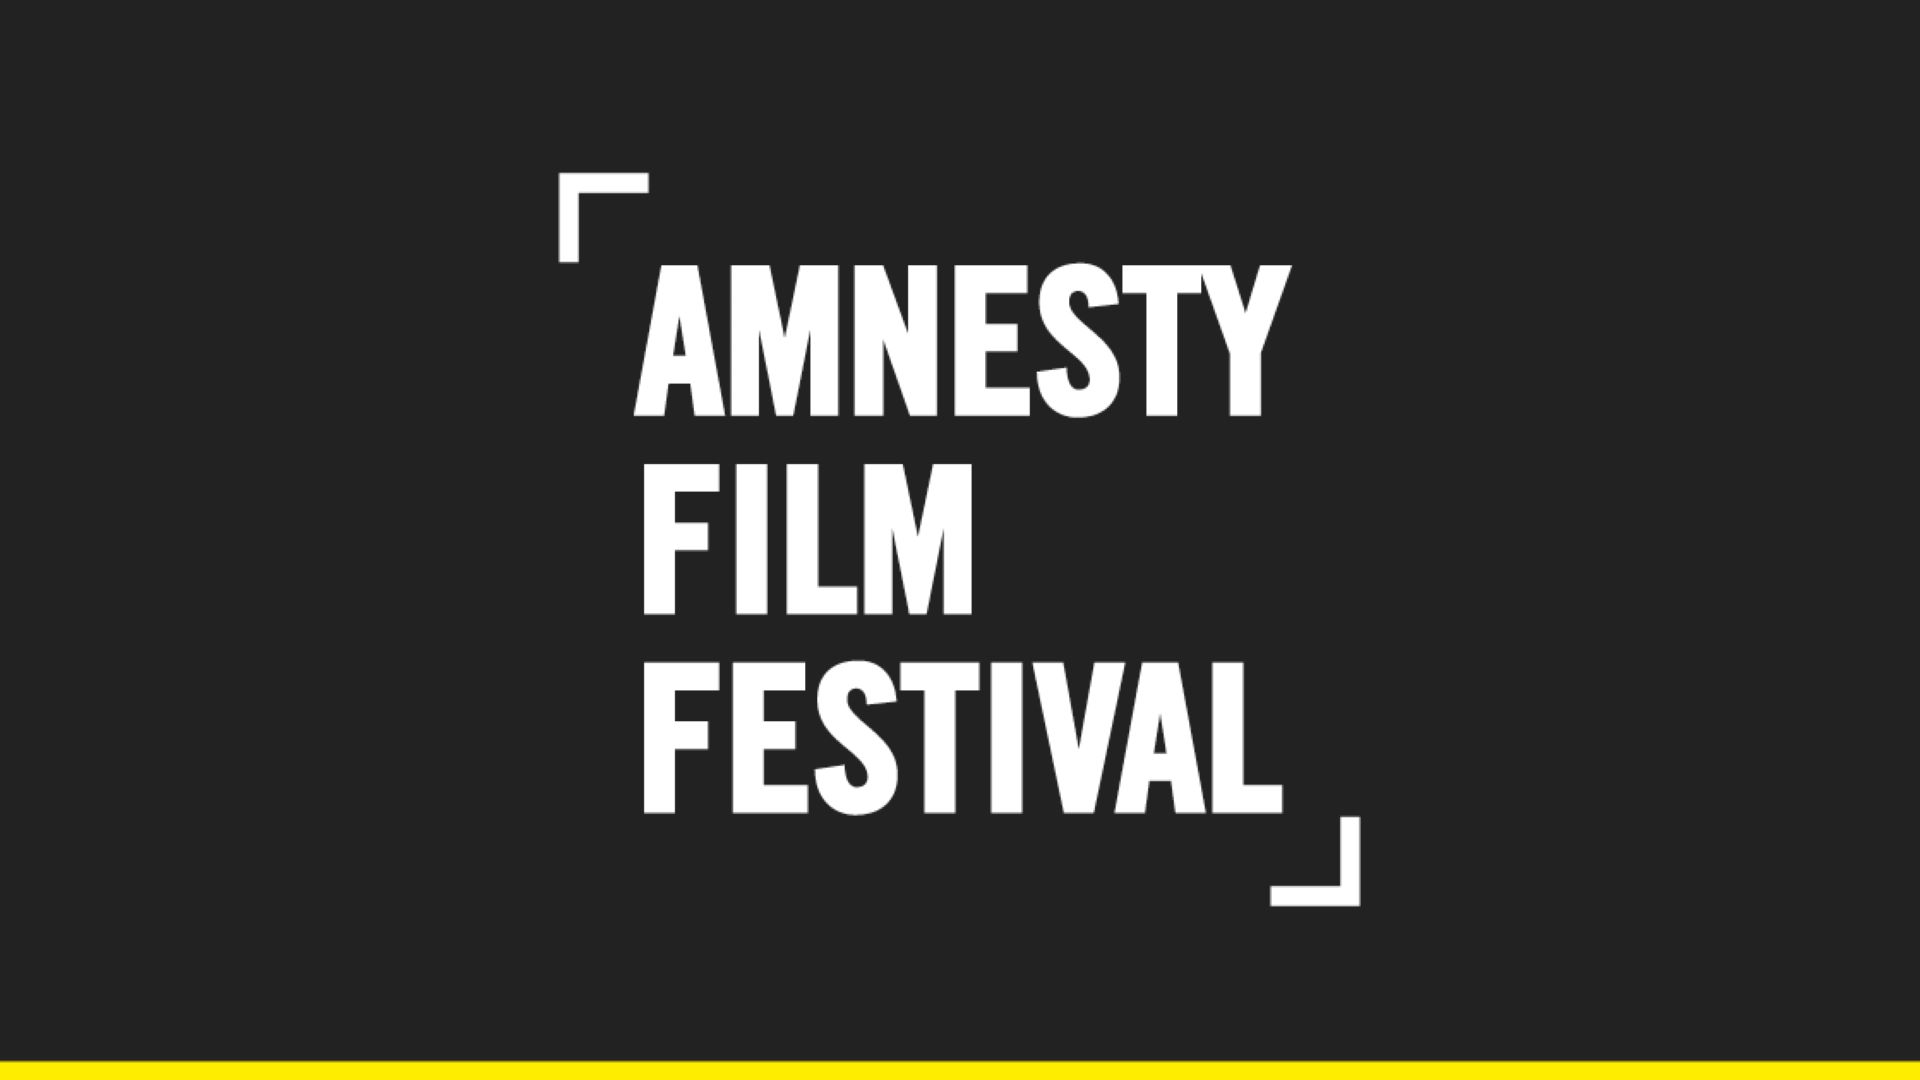 Amnesty film festival